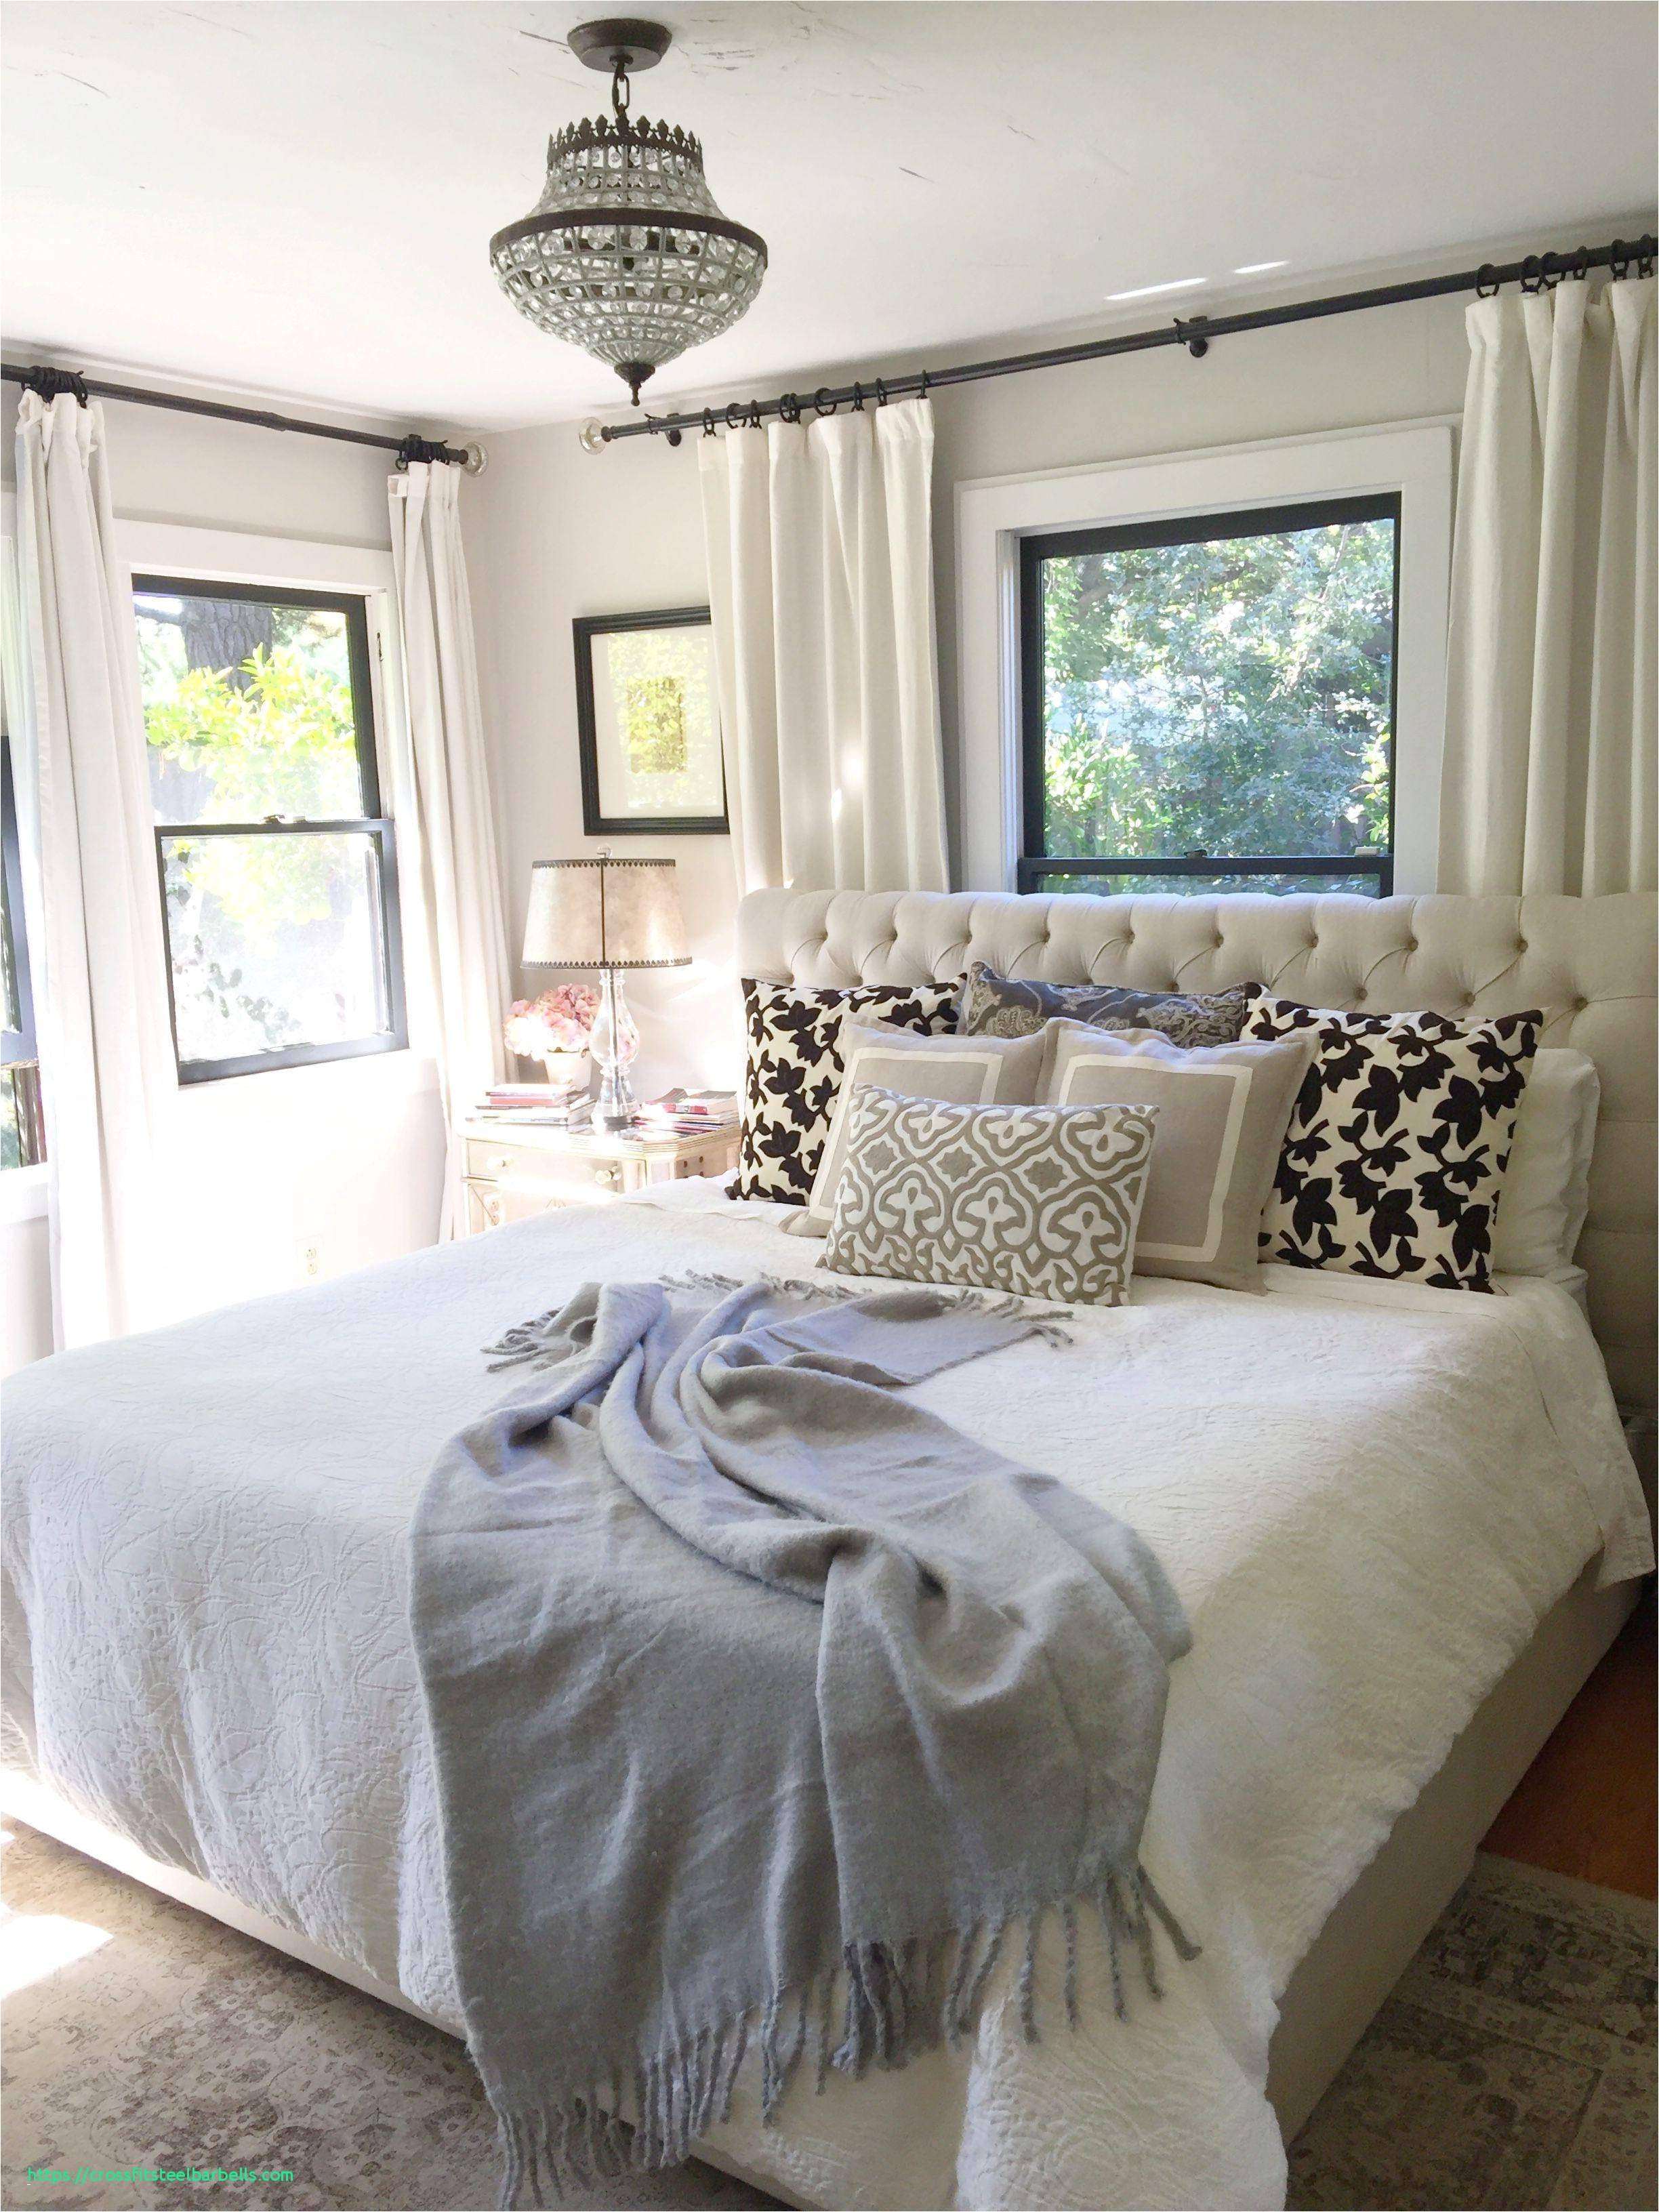 interior design styles for small bedroom luxury home interior led lighting fresh bmw x1 e84 2